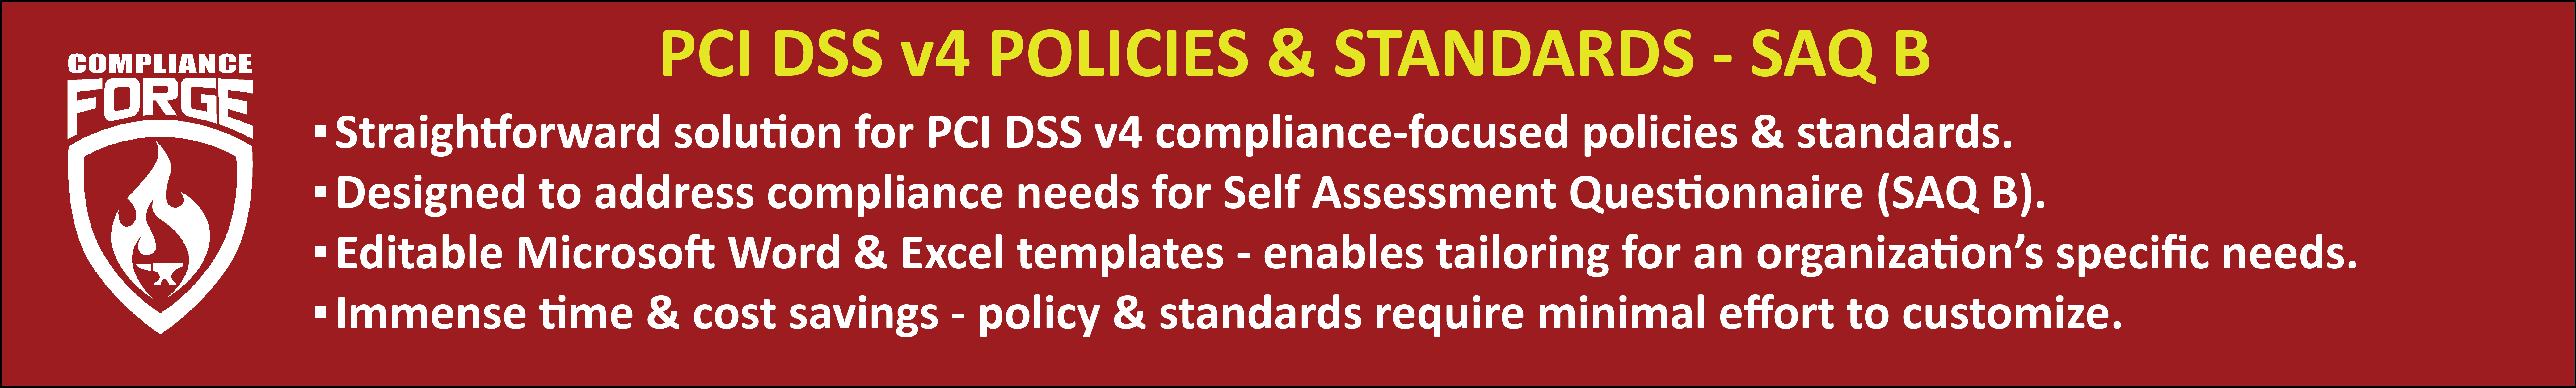 PCI DSS v4 SAQ b policies and standards example